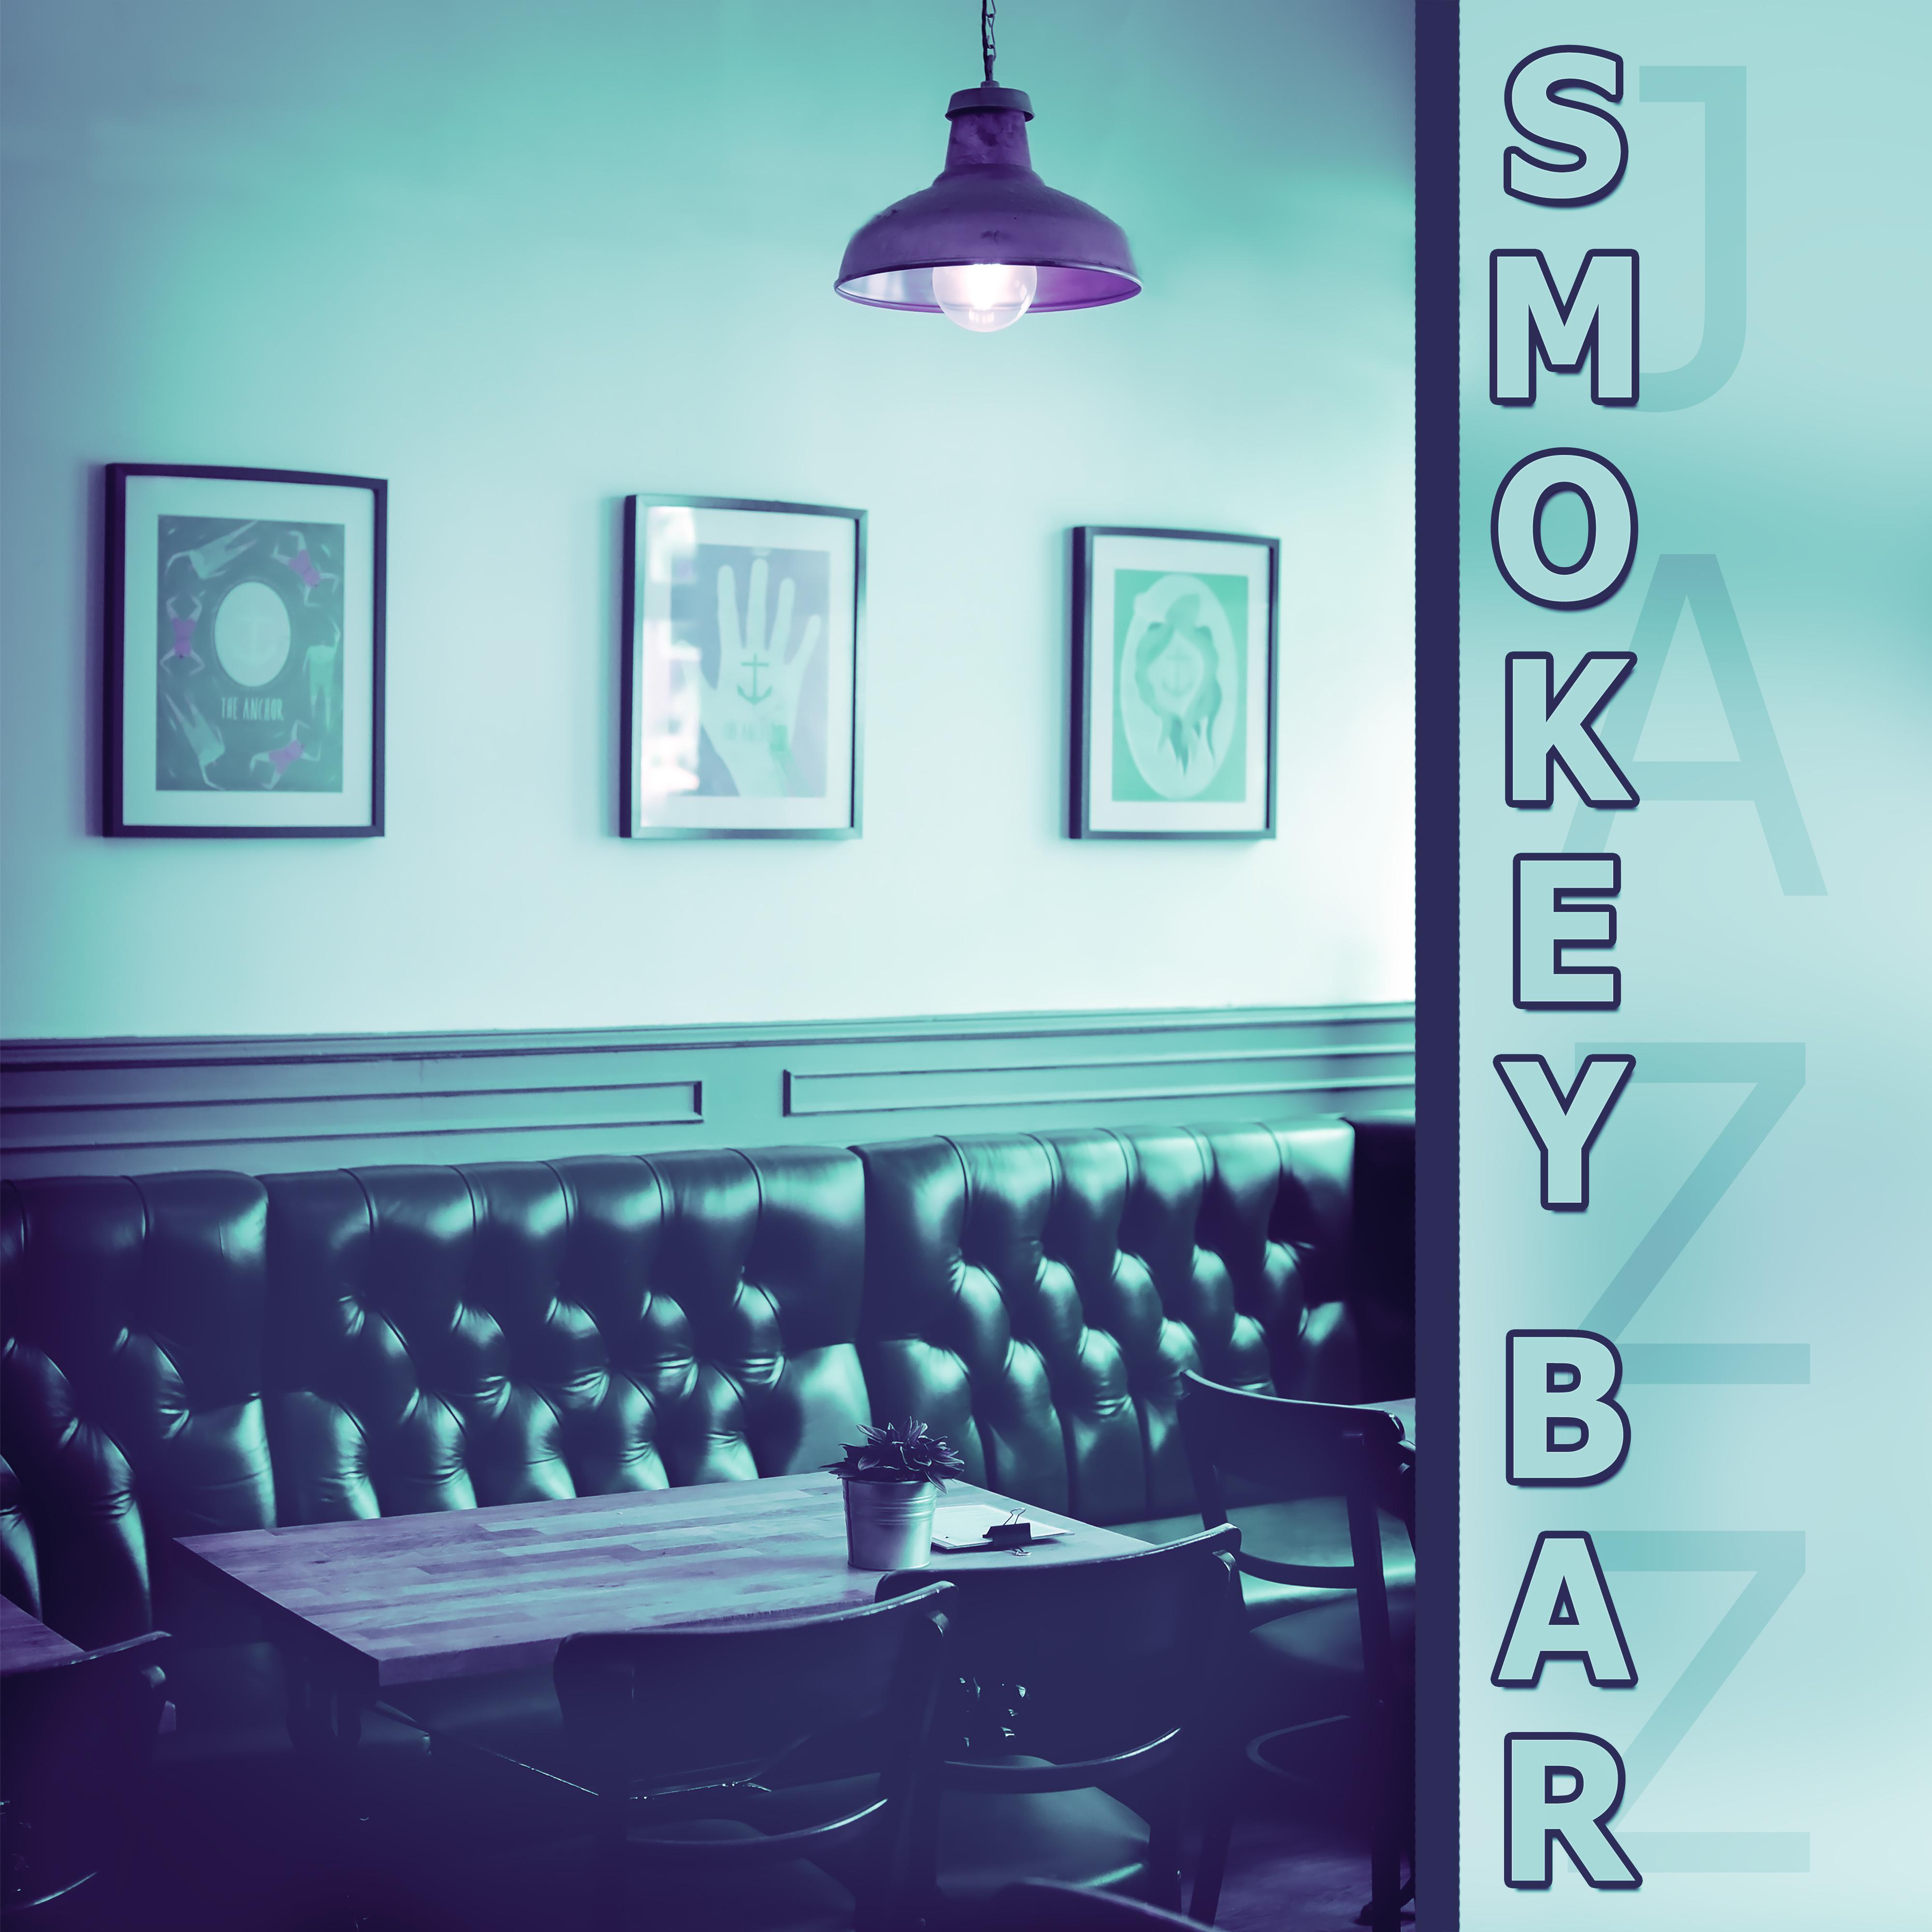 Smokey Bar  Best Collection of Jazz Music, Mellow Jazz, Instrumental Piano Sounds, Calming Background Jazz, Cocktail Bar